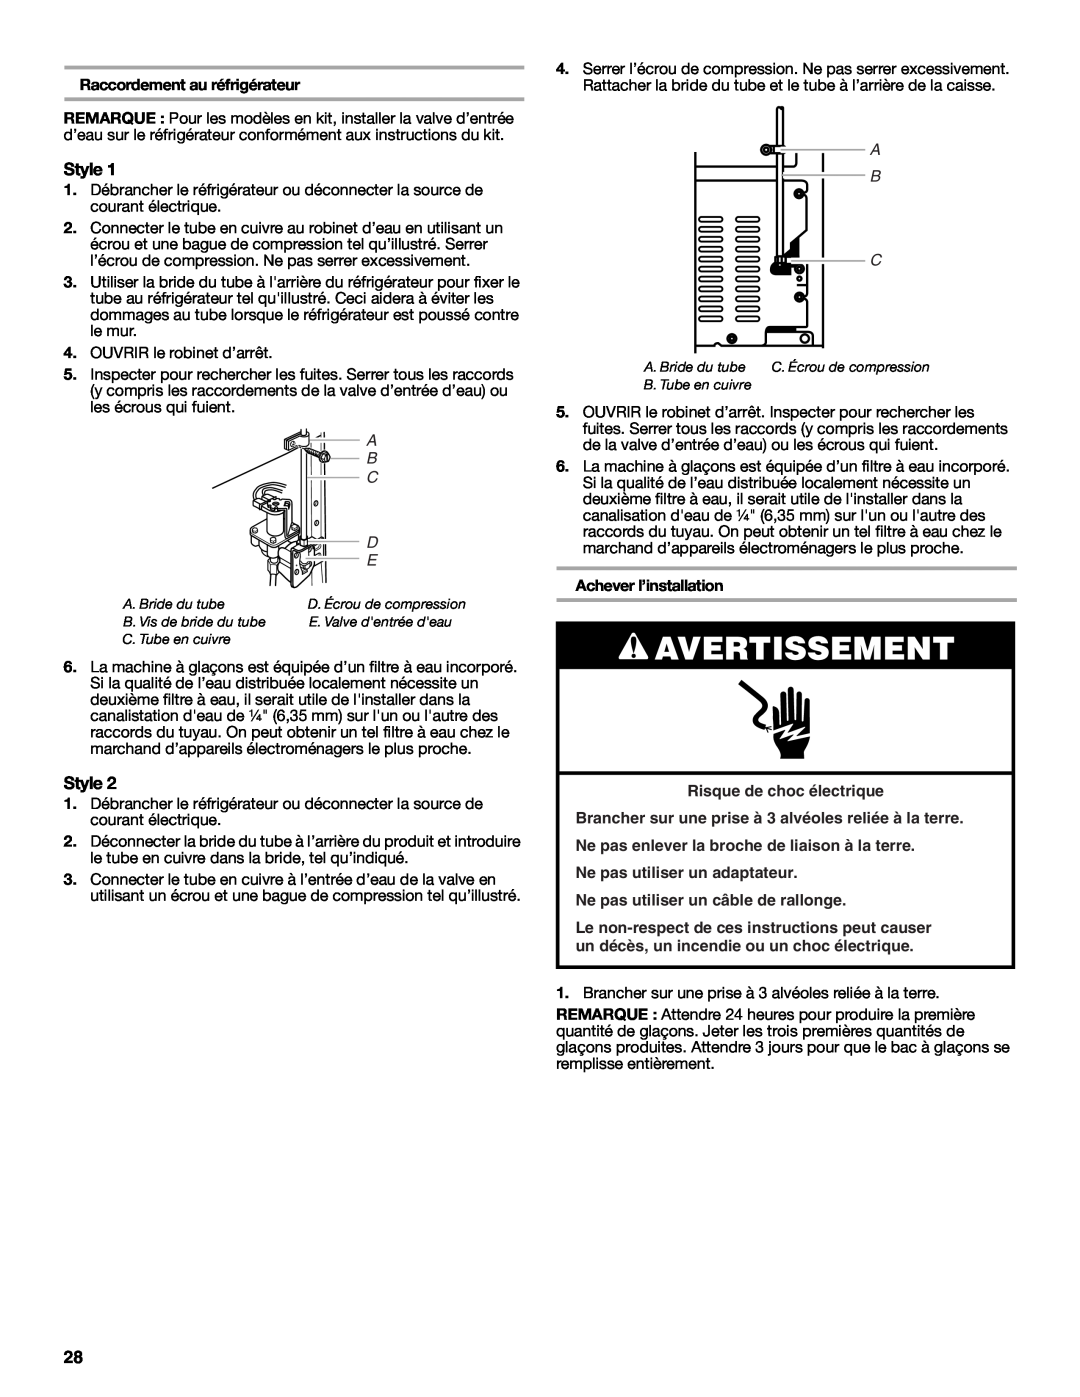 Whirlpool W10315410A installation instructions Avertissement, Raccordement au réfrigérateur, A B C, Achever l’installation 